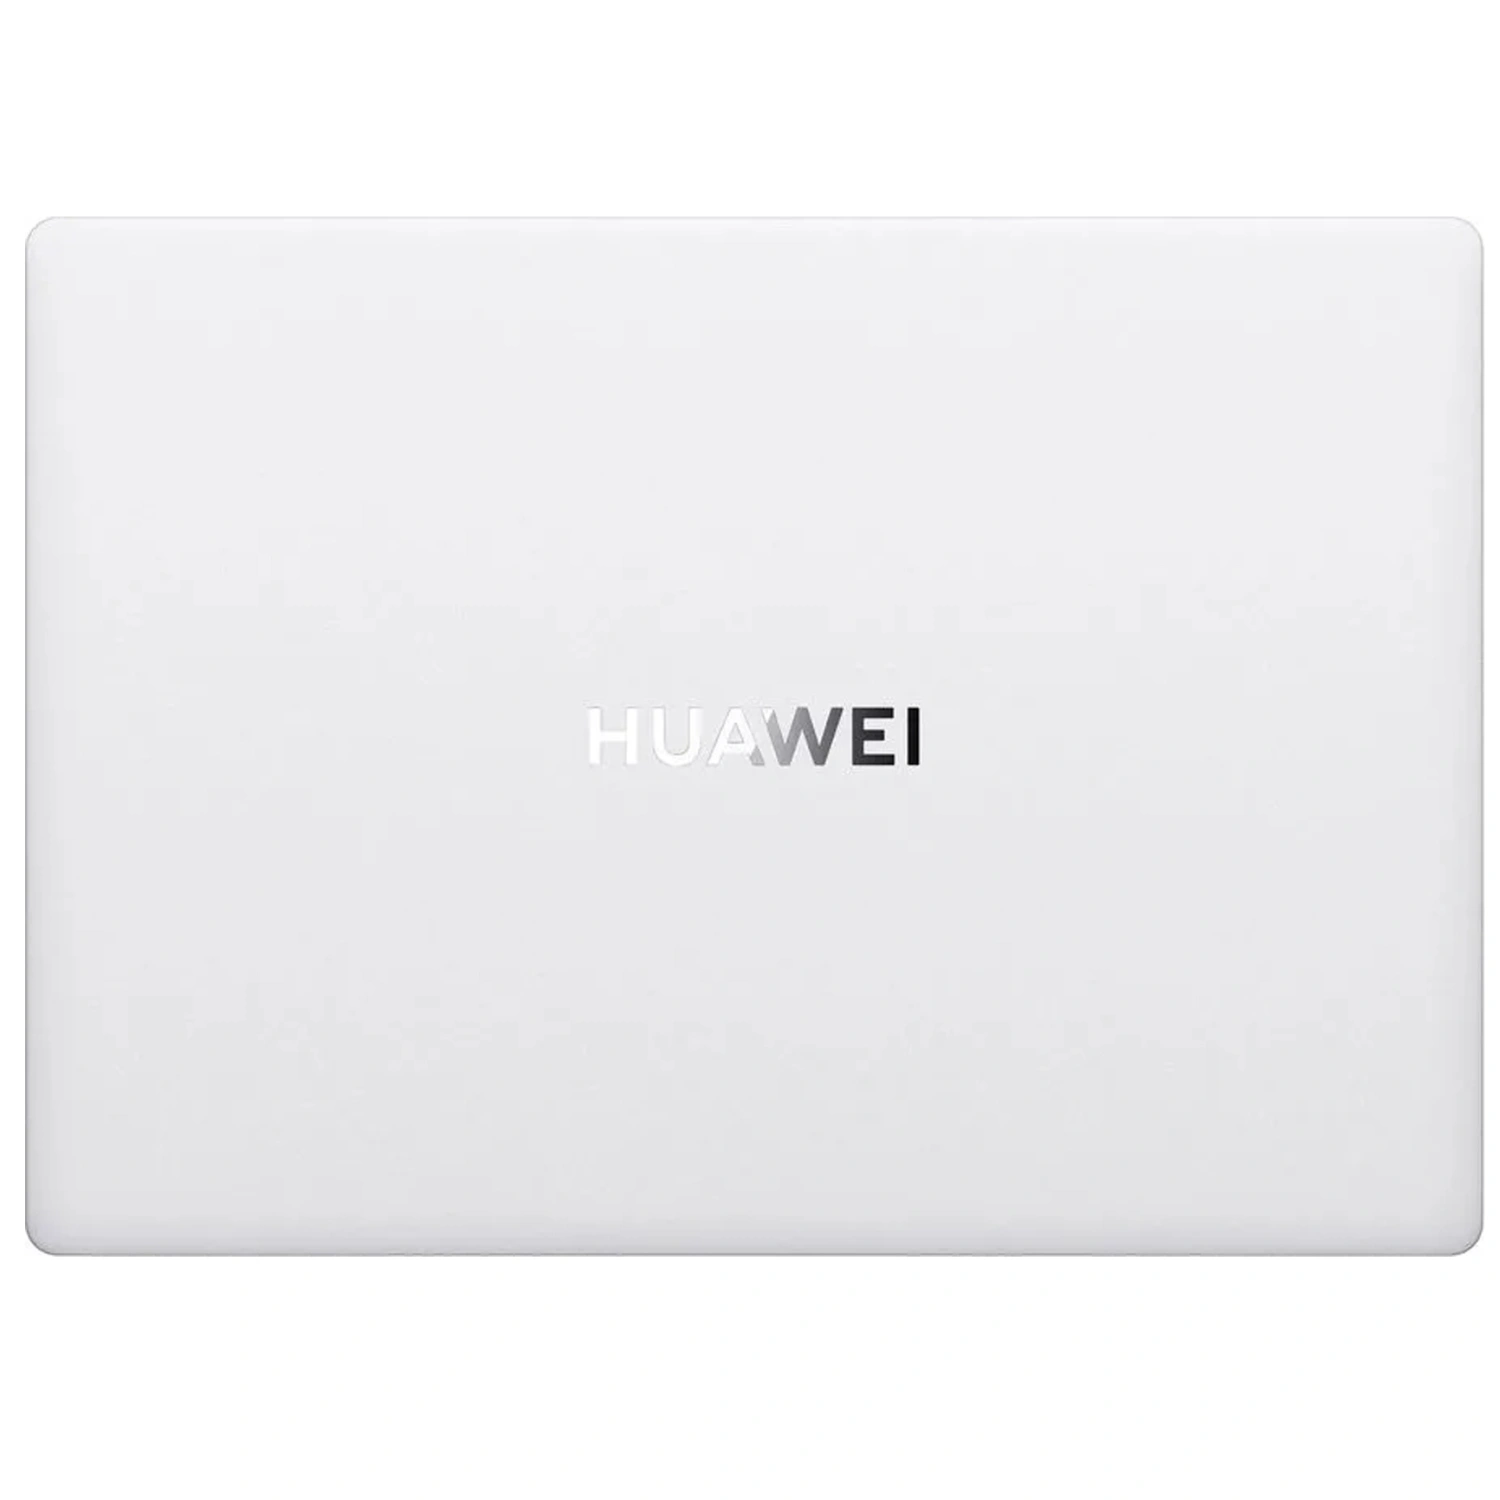 Huawei matebook mclf x 53013ydk. Ноутбук Huawei MATEBOOK X Pro MRGF-X (53013mer). Huawei MATEBOOK X Pro i7-1260p. Huawei MATEBOOK X Pro MRGF-X белый. Huawei MATEBOOK X Pro morgang-w7611tm 53013sjt.